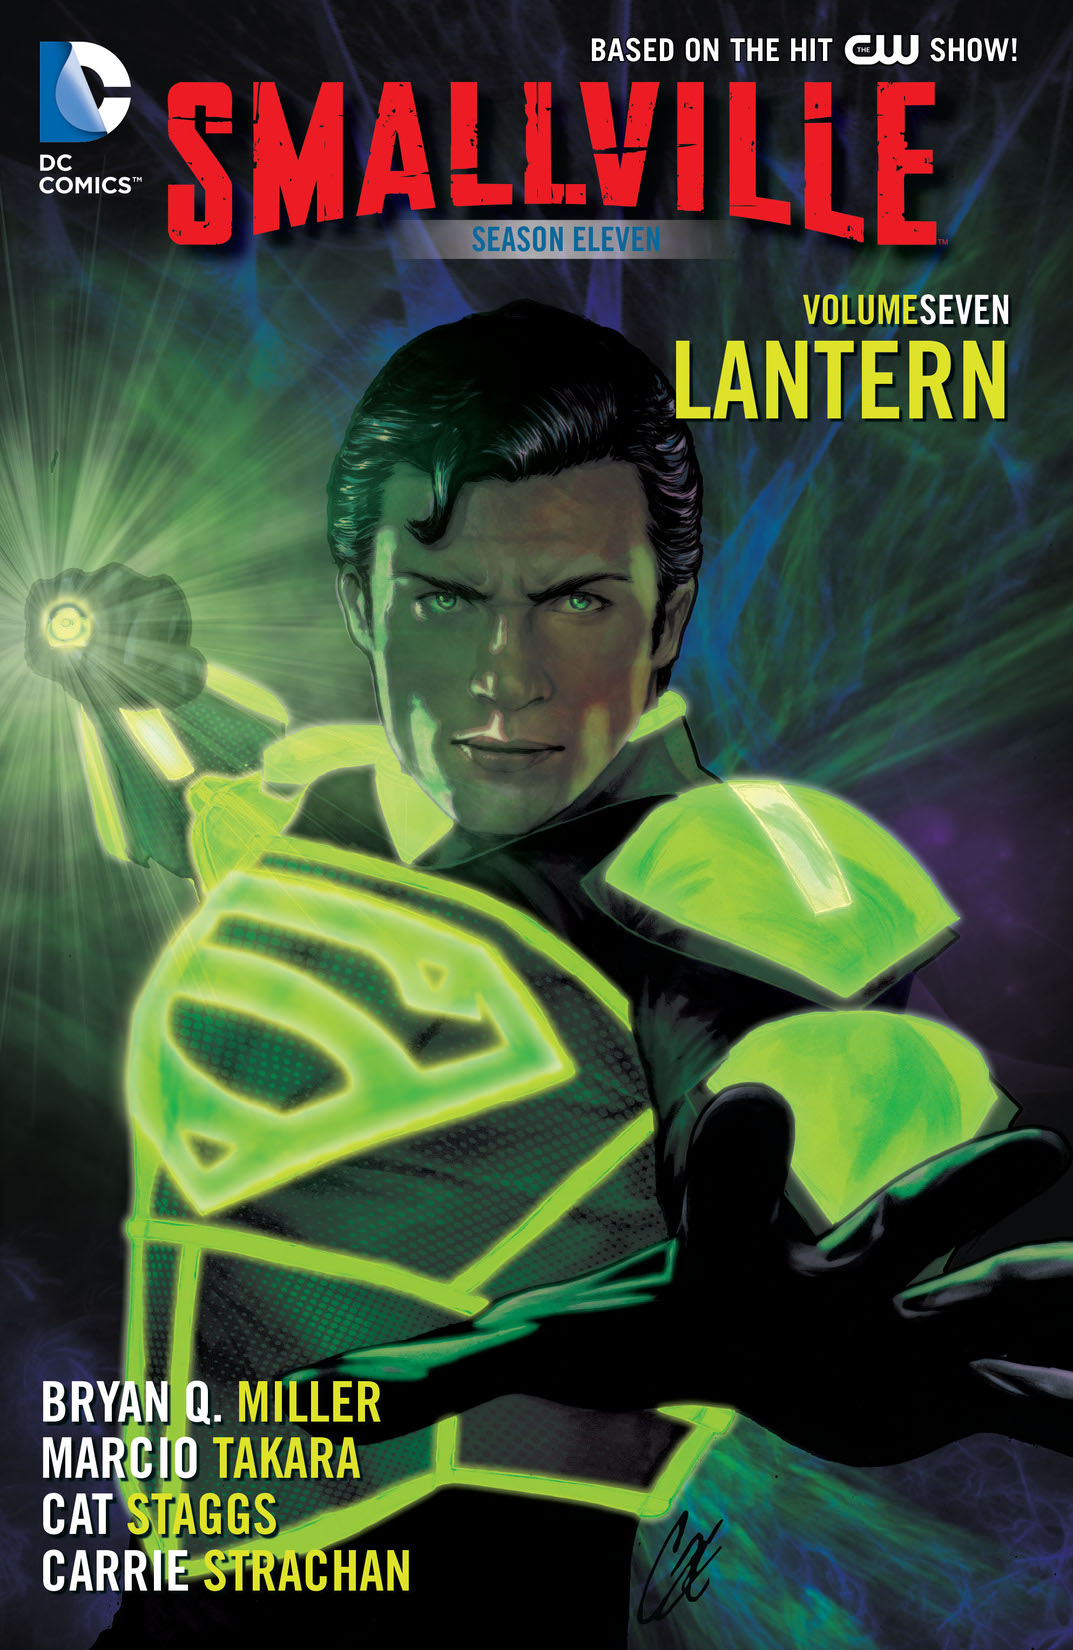 Smallville Season 11 Vol. 7: Lantern preview images